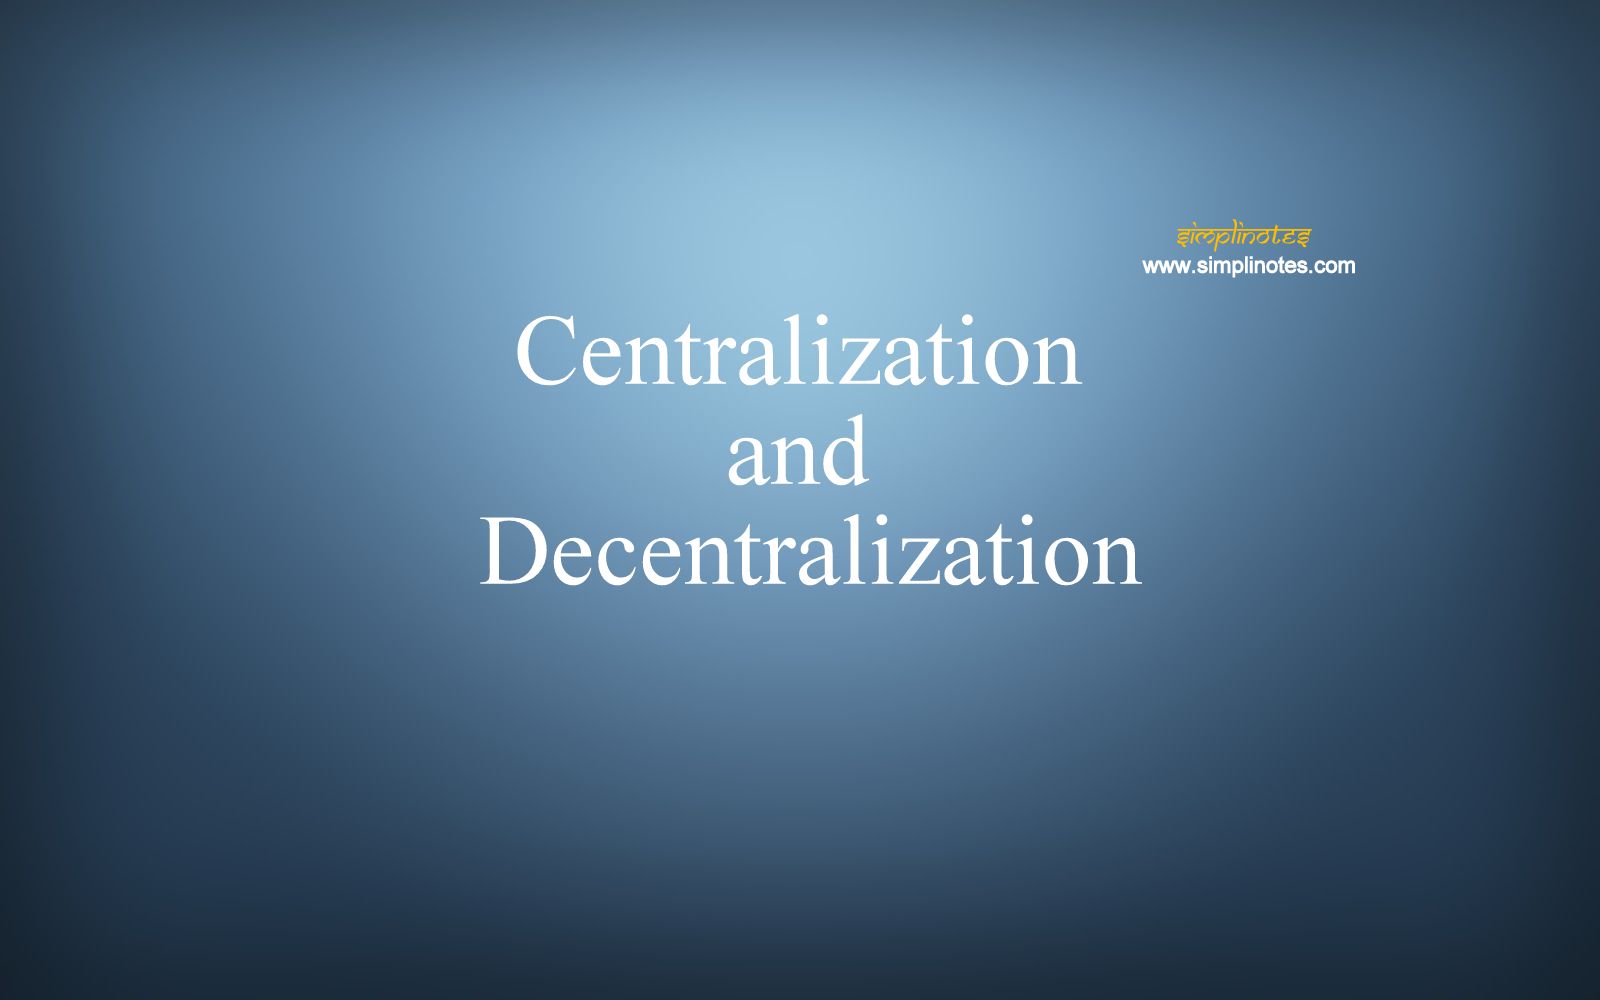 in decentralization subordinates